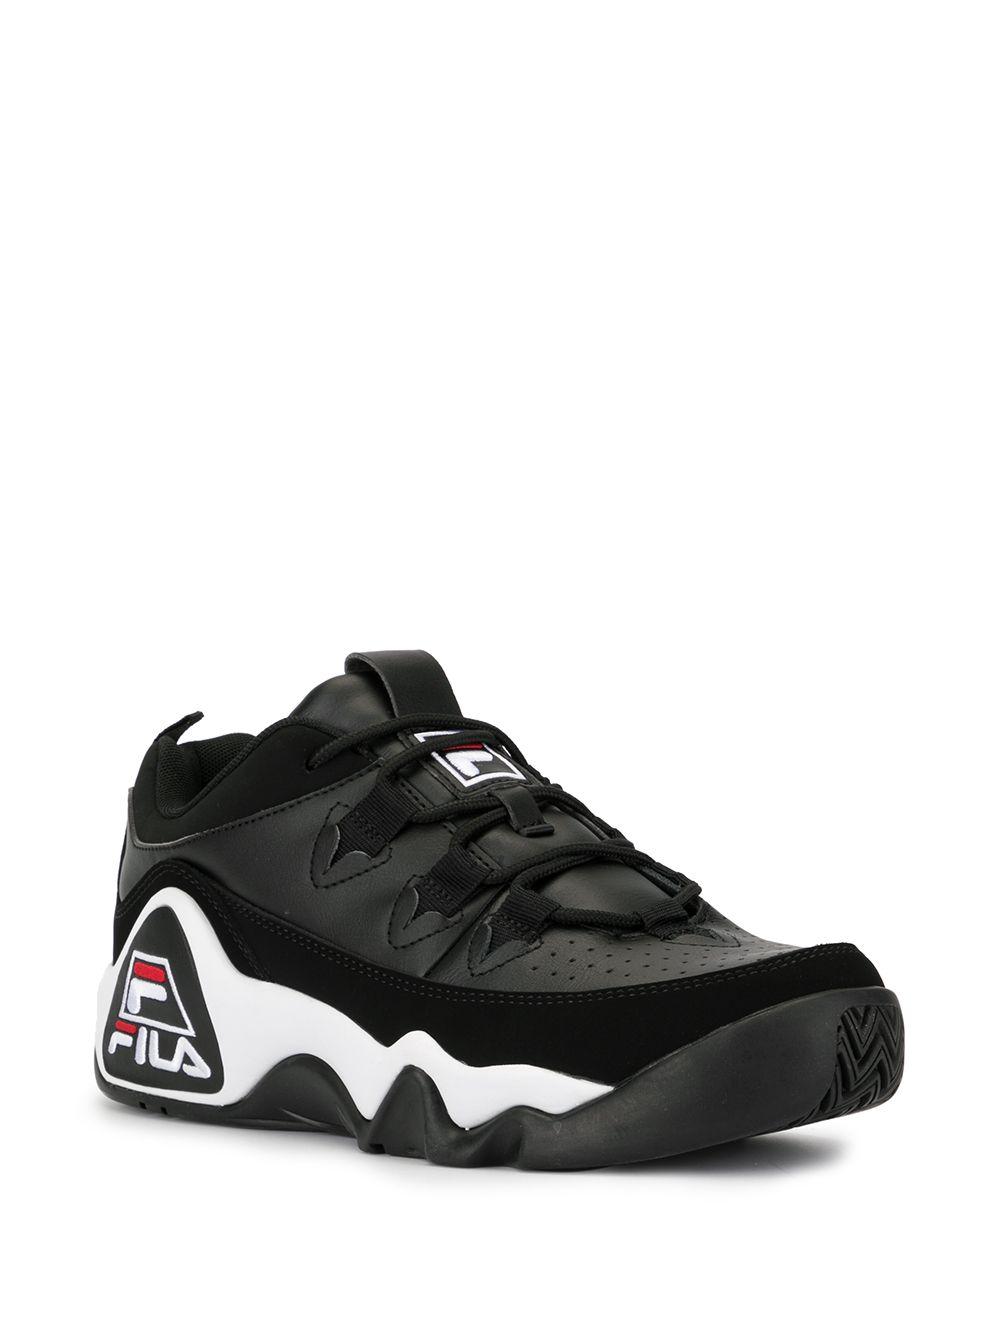 Fila Low Top Grant Hill 1 Sneakers in Black for Men | Lyst